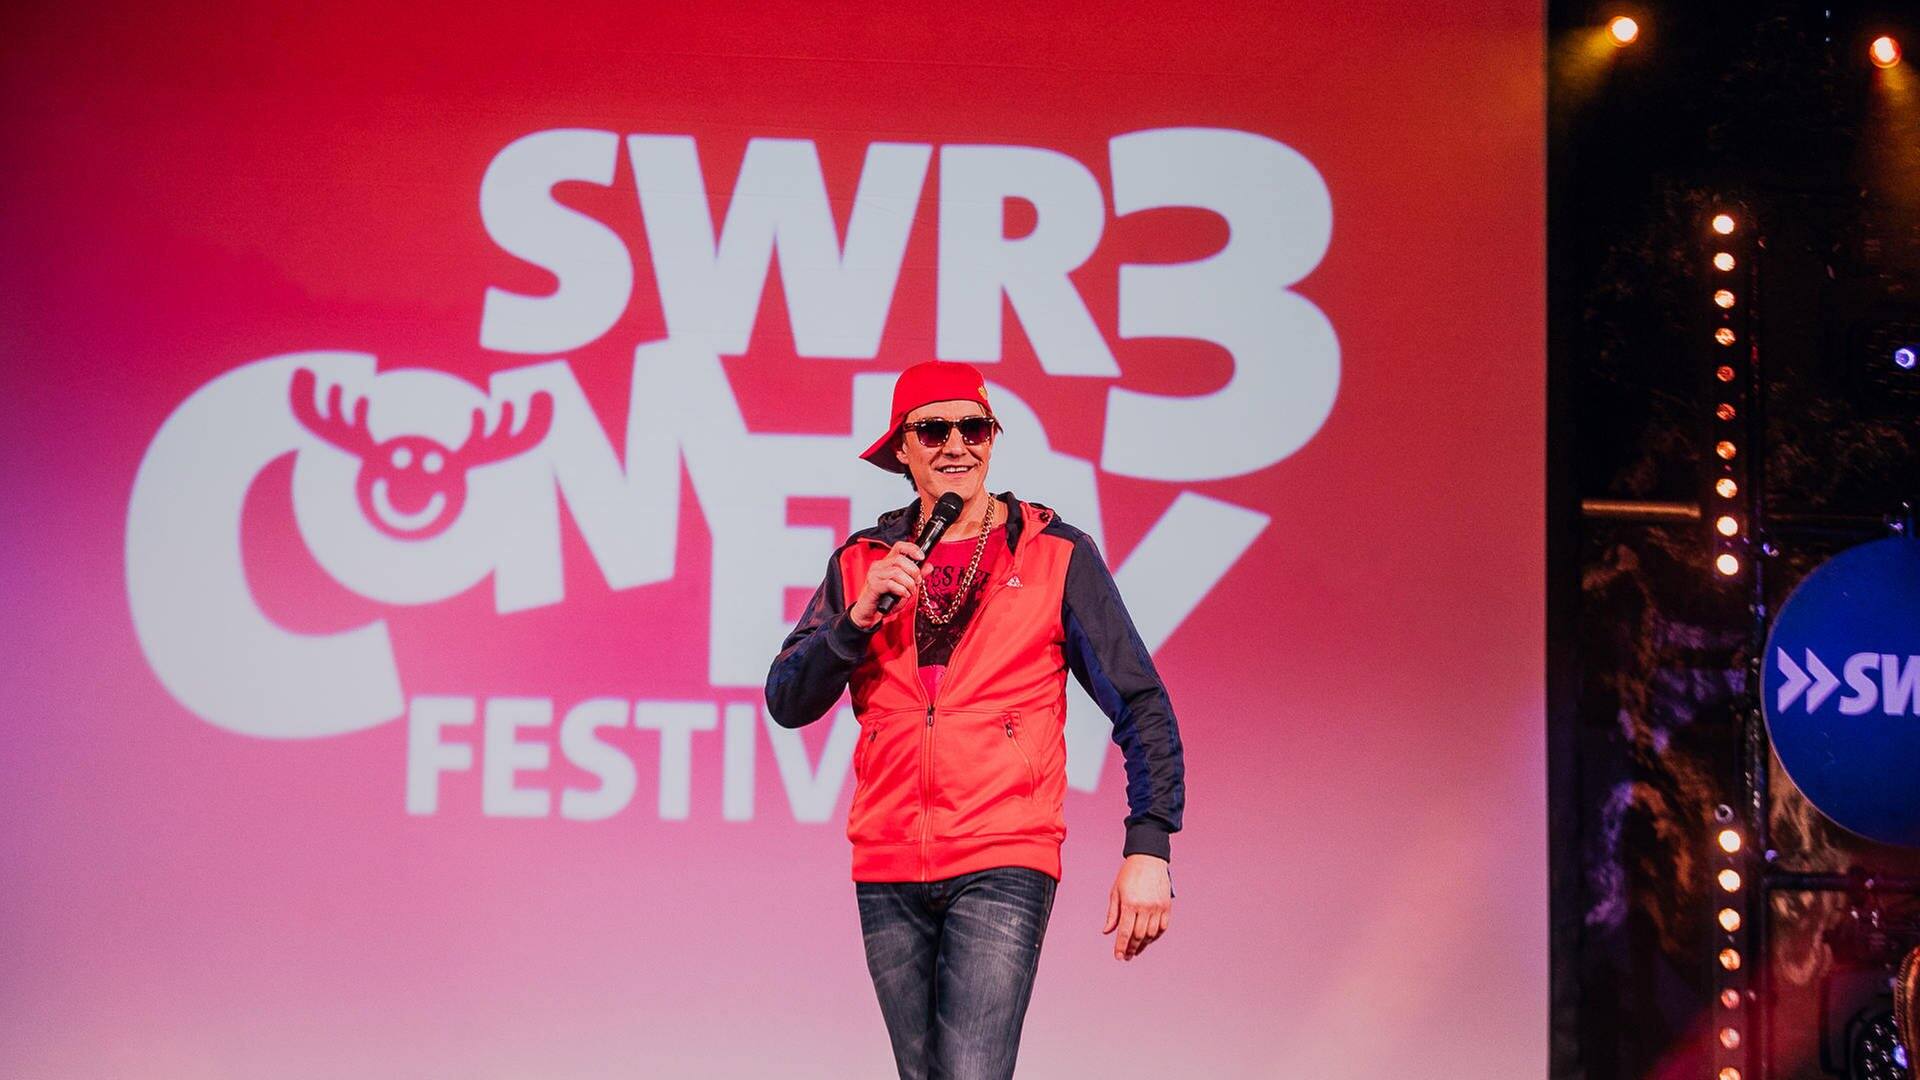 Matze Knop beim SWR3 Comedy Festival 2018 (Foto: SWR3)